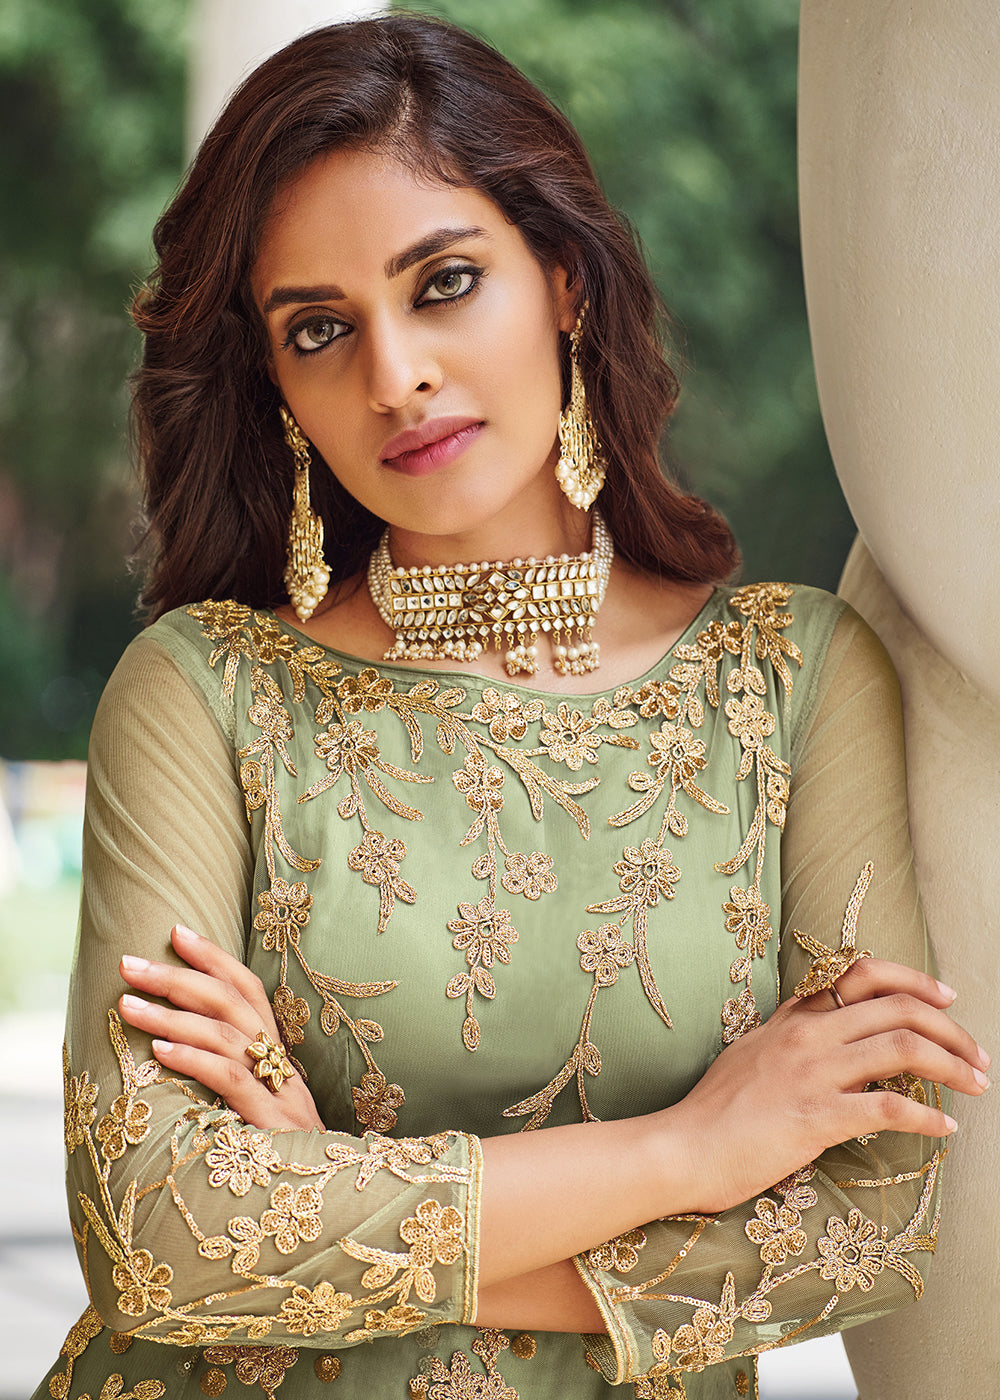 Buy Now Appealing Pista Green Designer Front Slit Anarkali Dress Online in USA, UK, Australia, New Zealand, Canada & Worldwide at Empress Clothing.